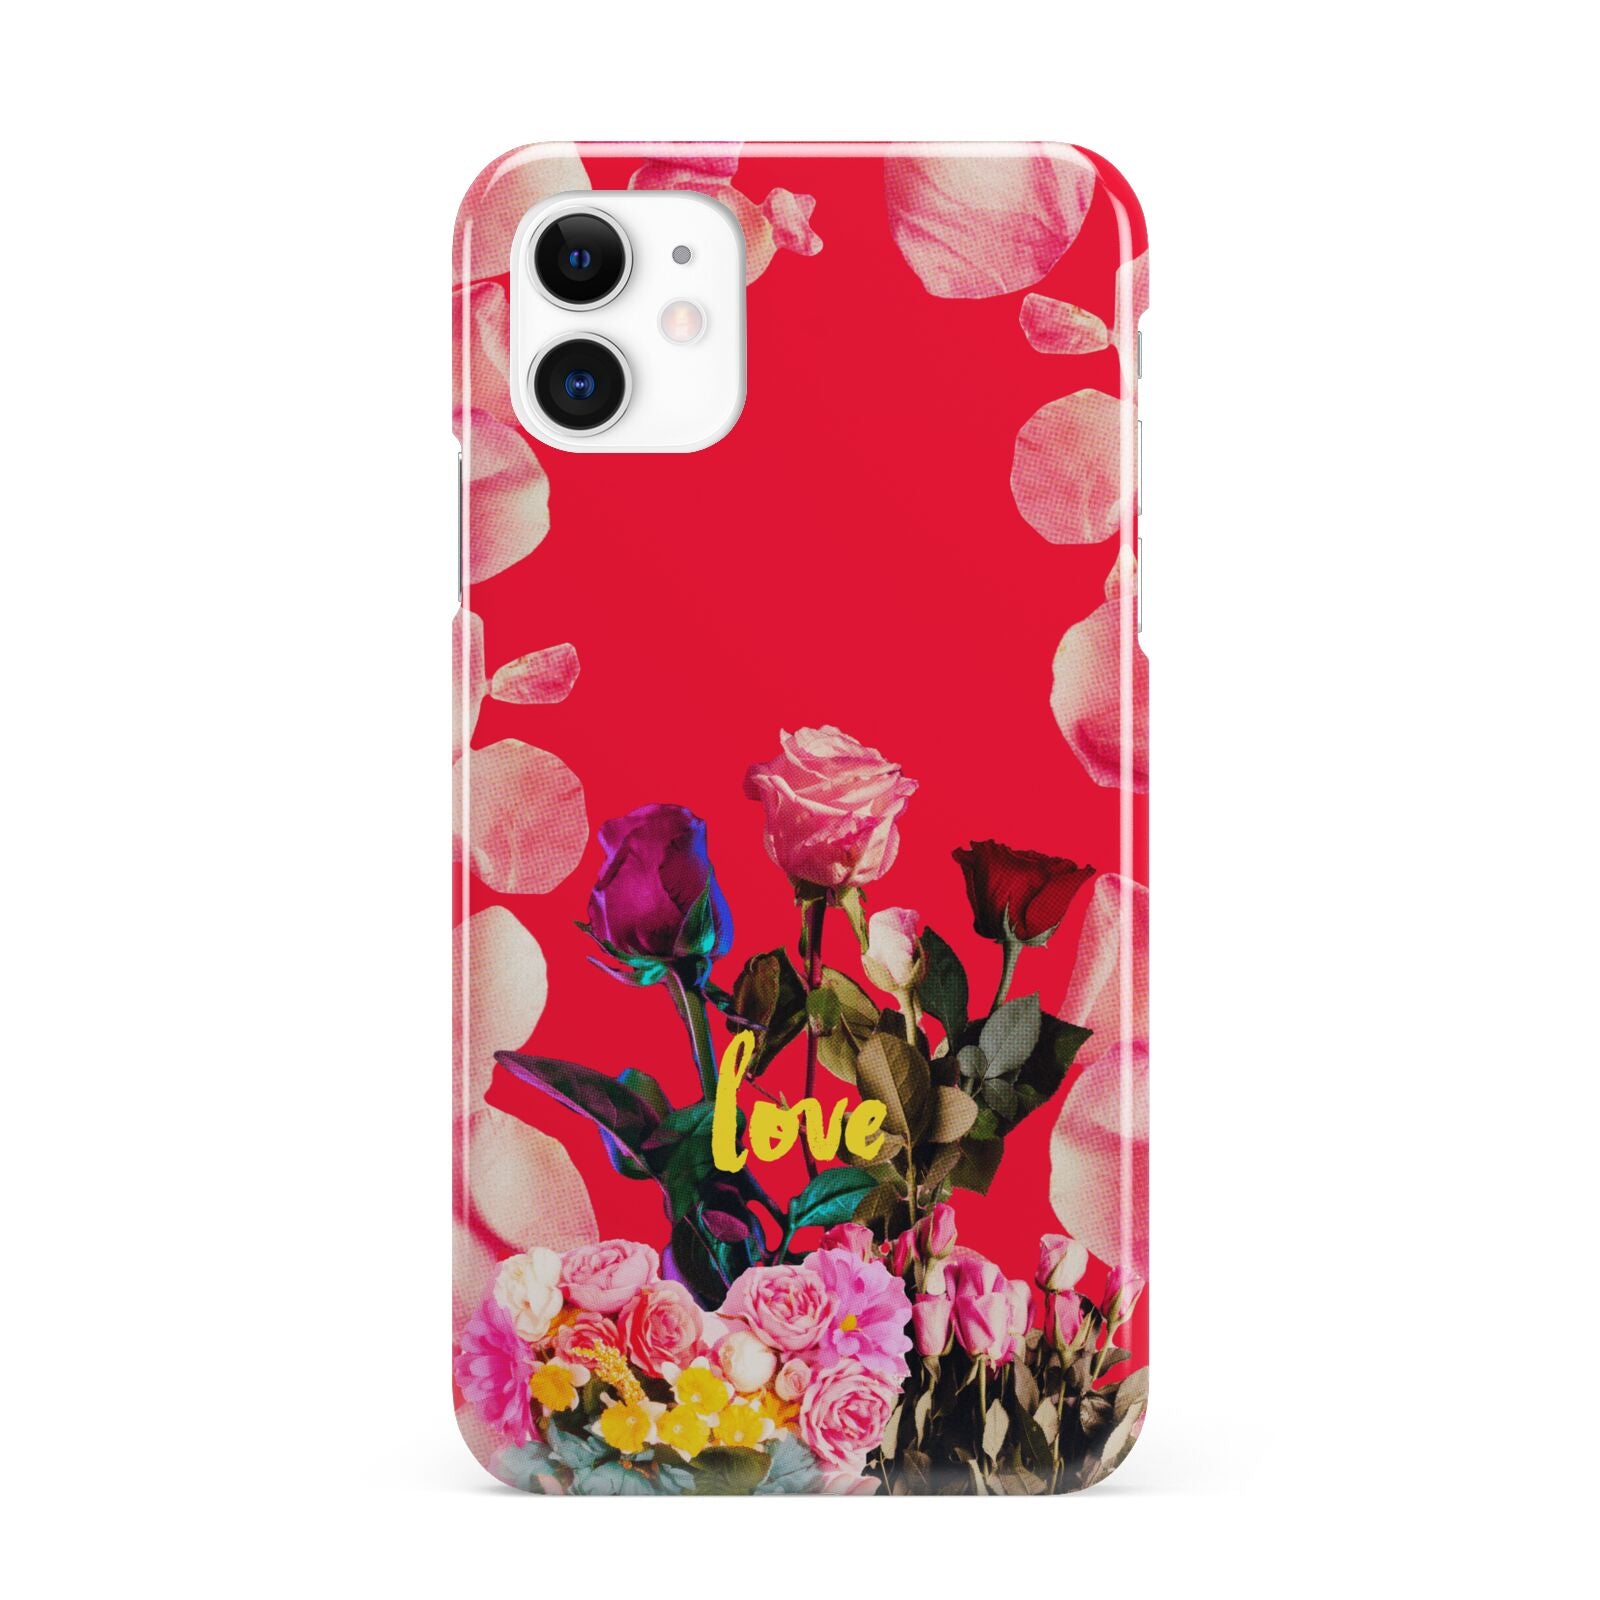 Retro Floral Valentine iPhone 11 3D Snap Case